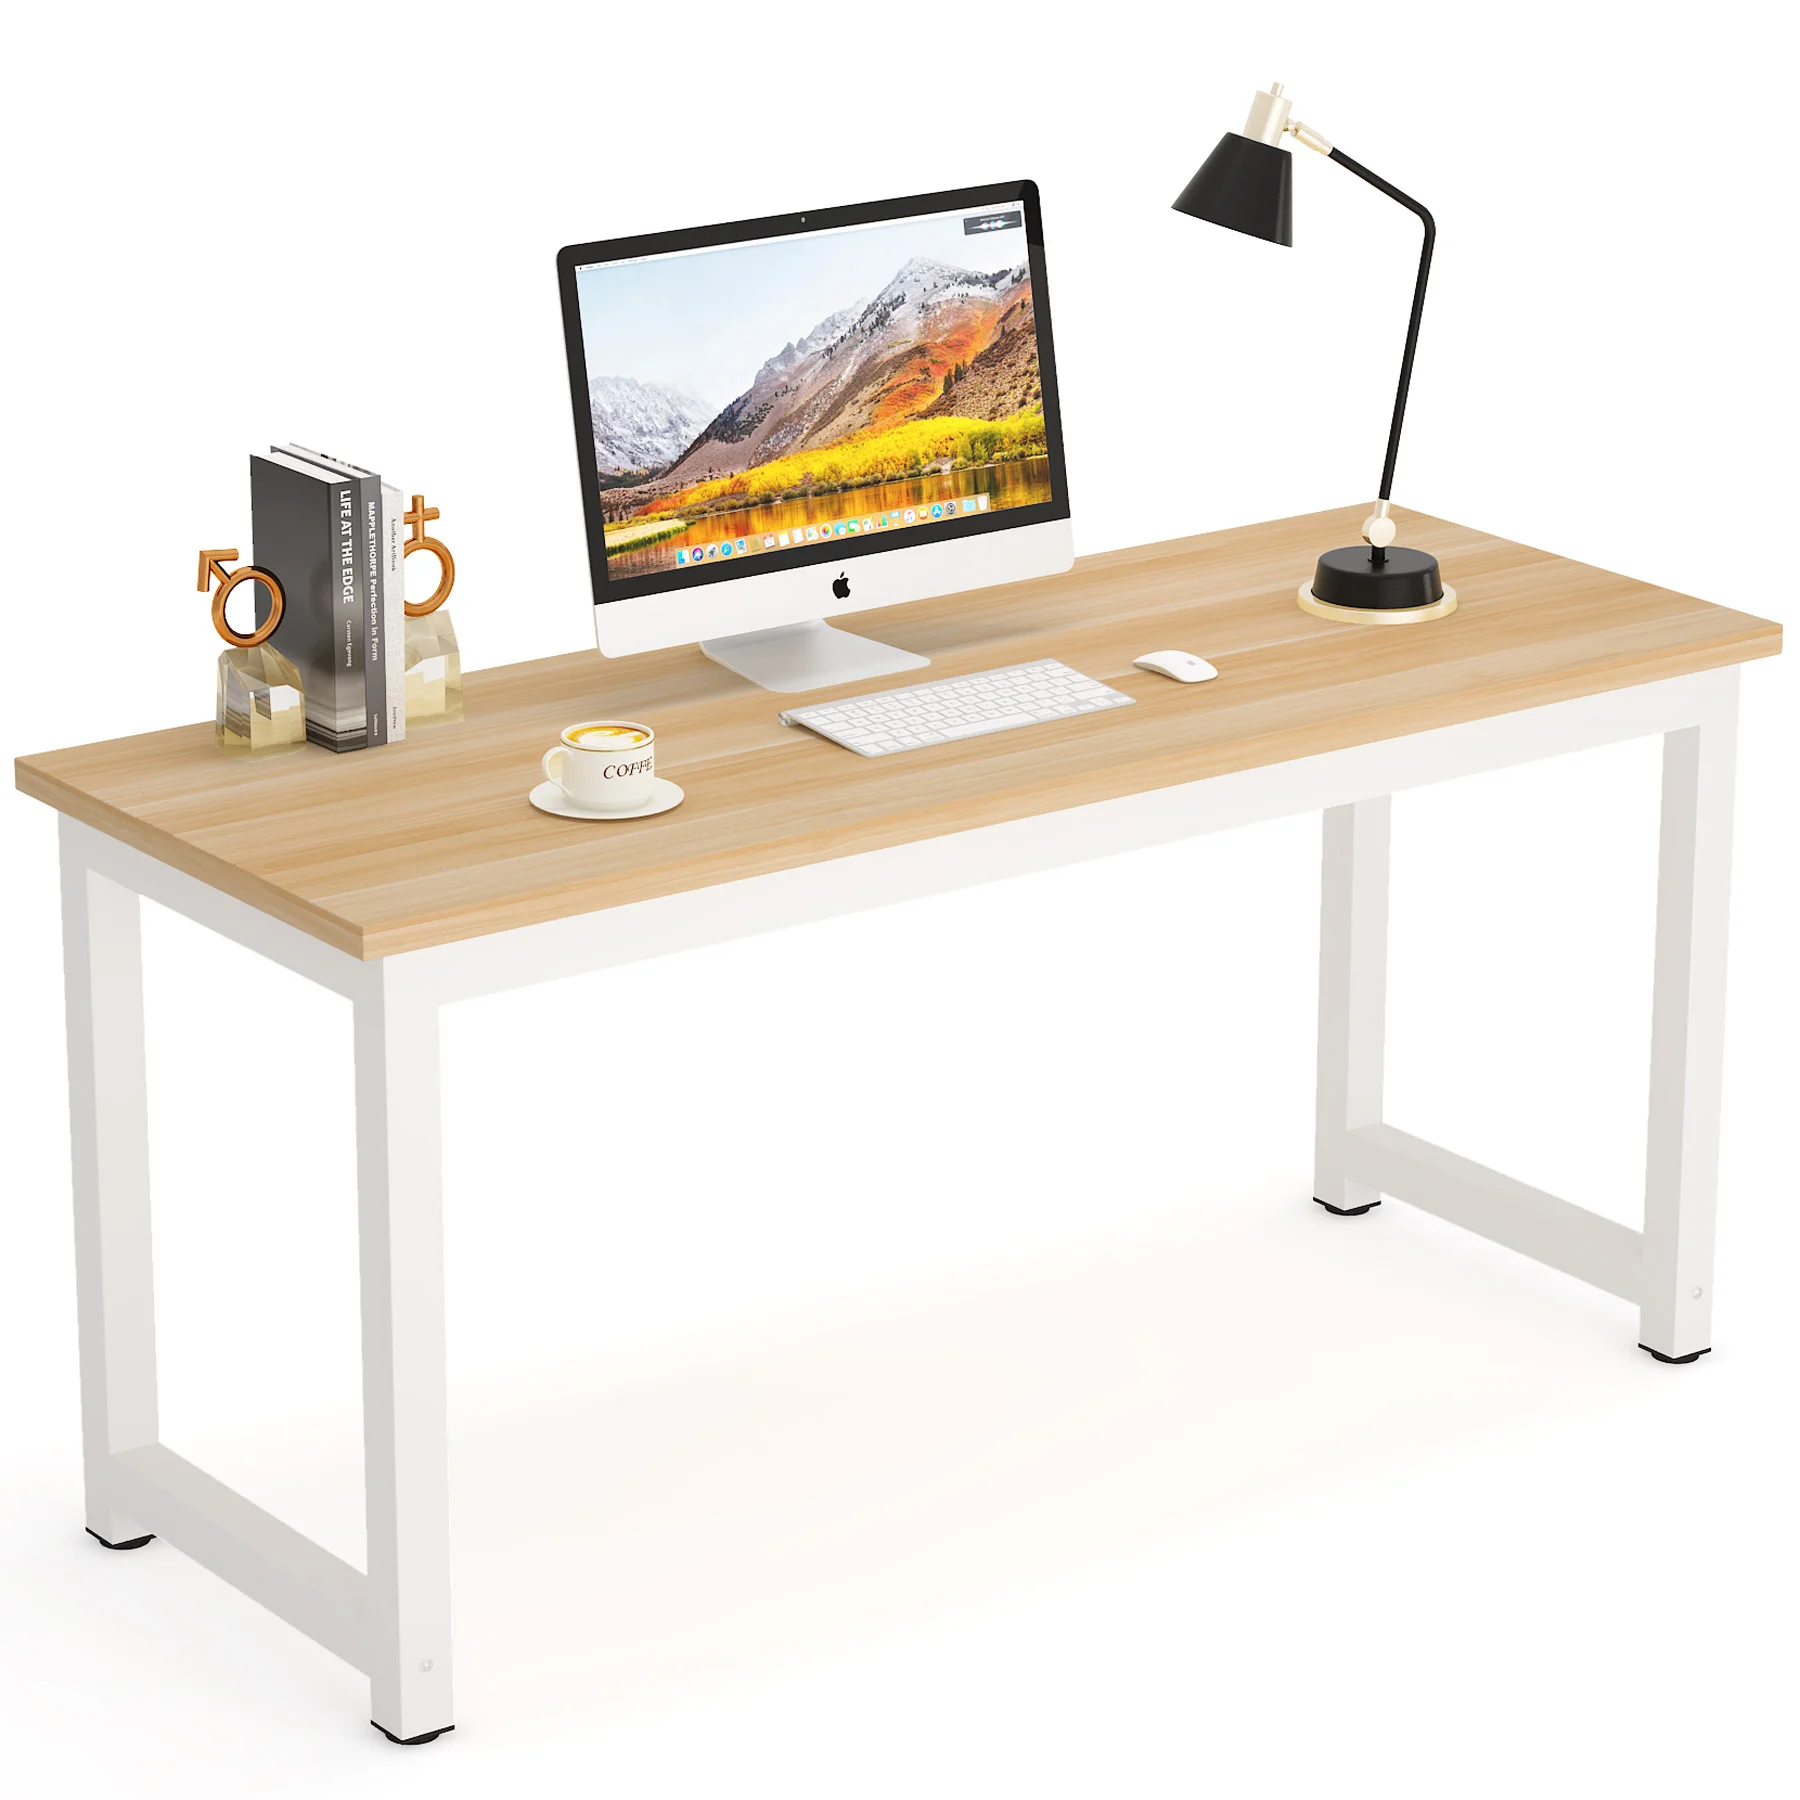 Supplier Office Desk Modern Office Furniture Wood Computer Table For Study Writing Desks